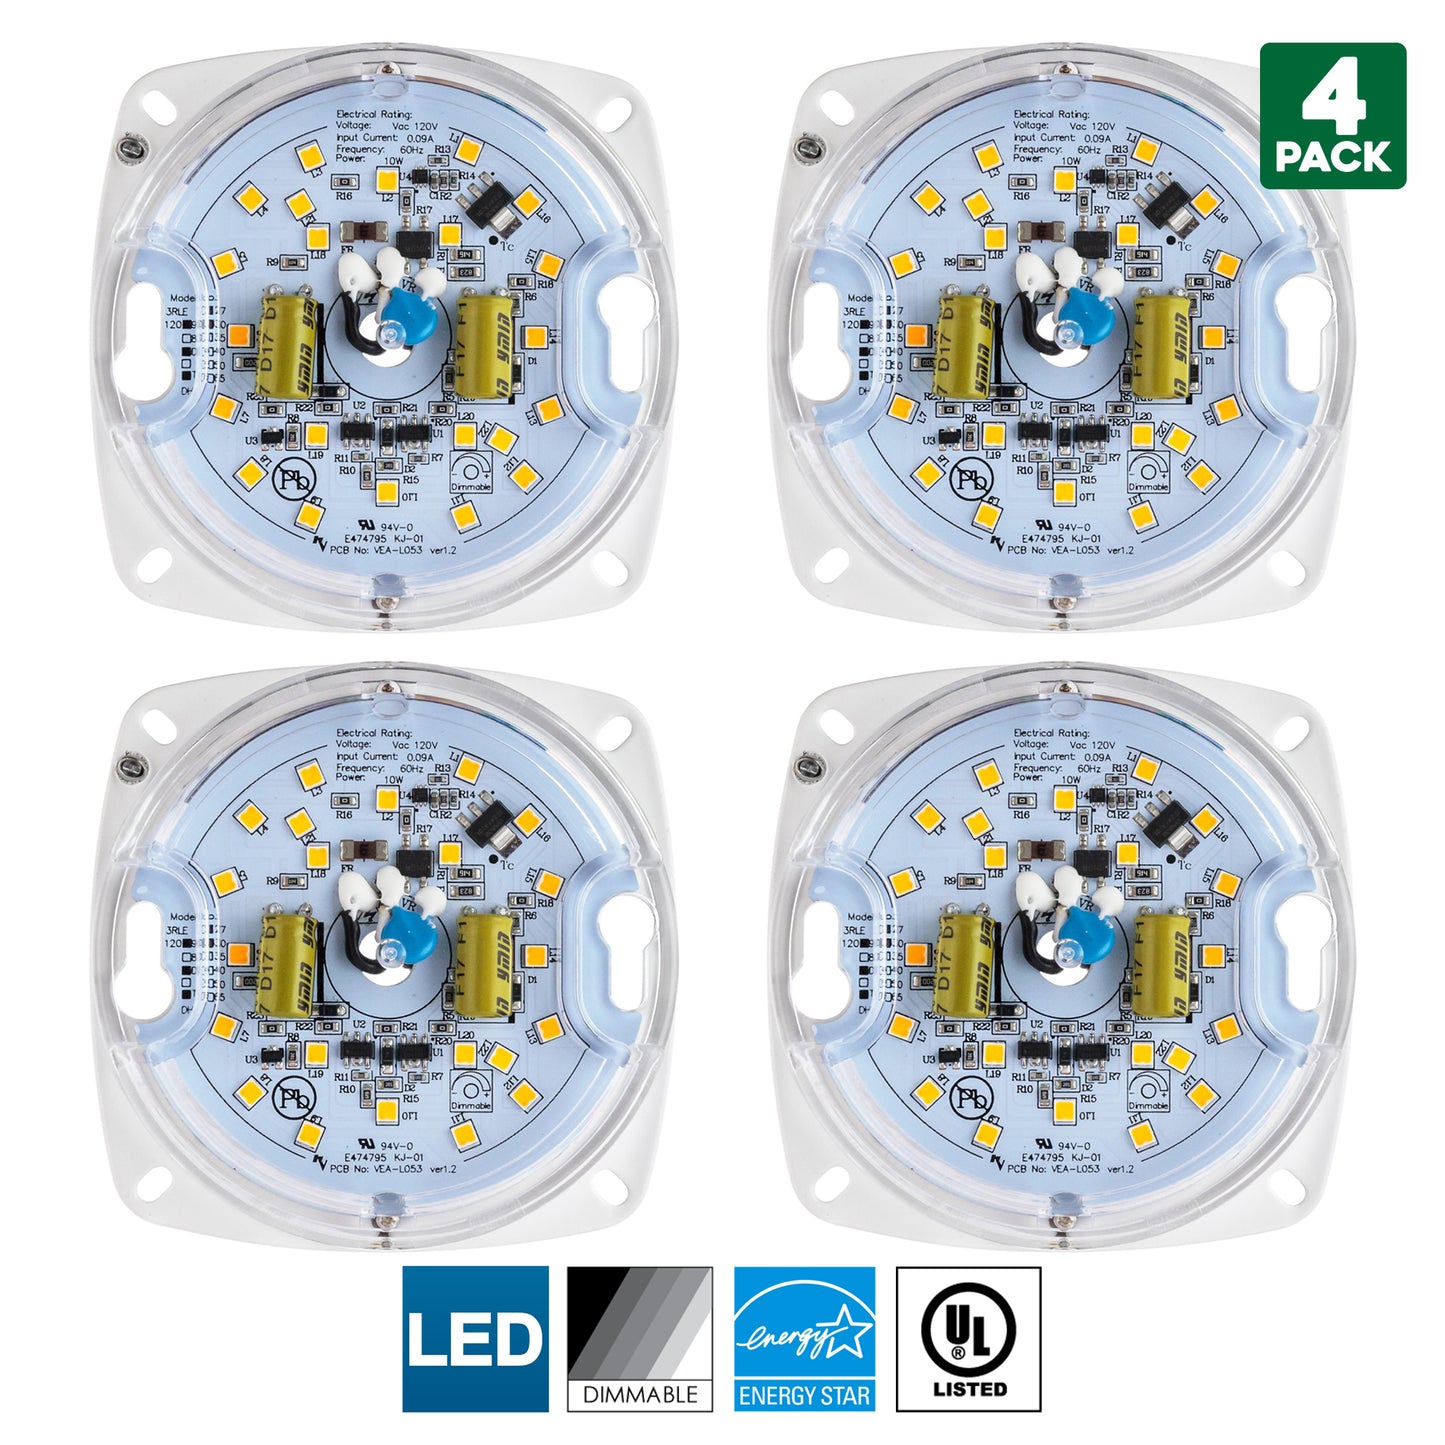 Sunlite LED Retrofit Light Engine, 3-Inch, 4000K Cool White, 10 Watt, Dimmable, Flush Ceiling Fixture LED Upgrade Panel, Energy Star Compliant, Commercial Grade, 90 CRI